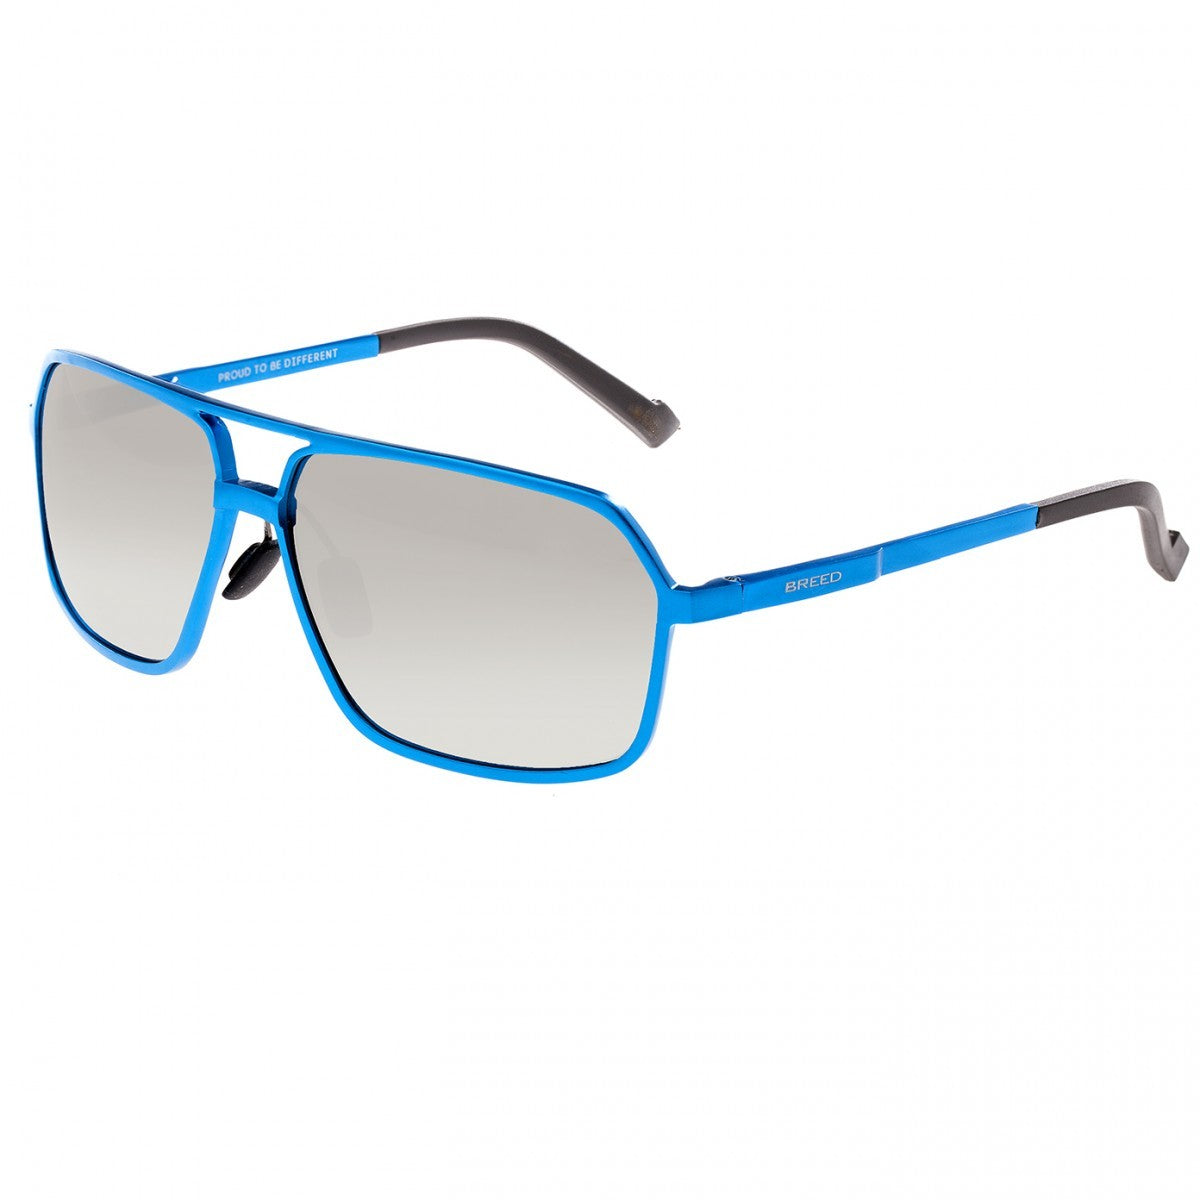 Breed Fornax Aluminium Polarized Sunglasses - Blue/Silver - BSG023BL